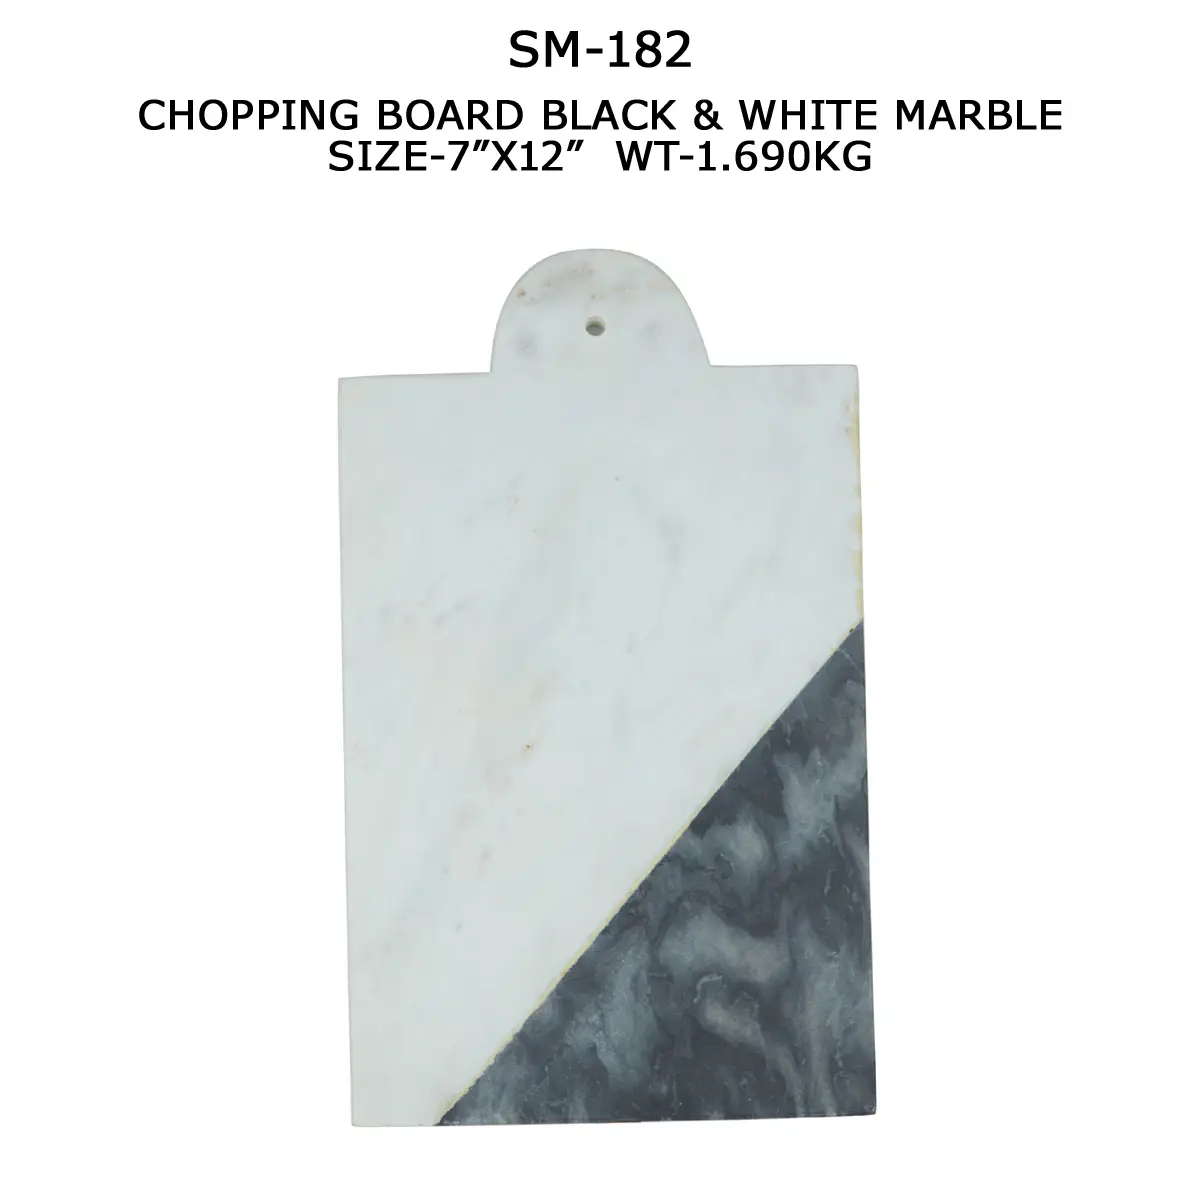 CHOPPING BOARD BLACK & WHITE MARBLE